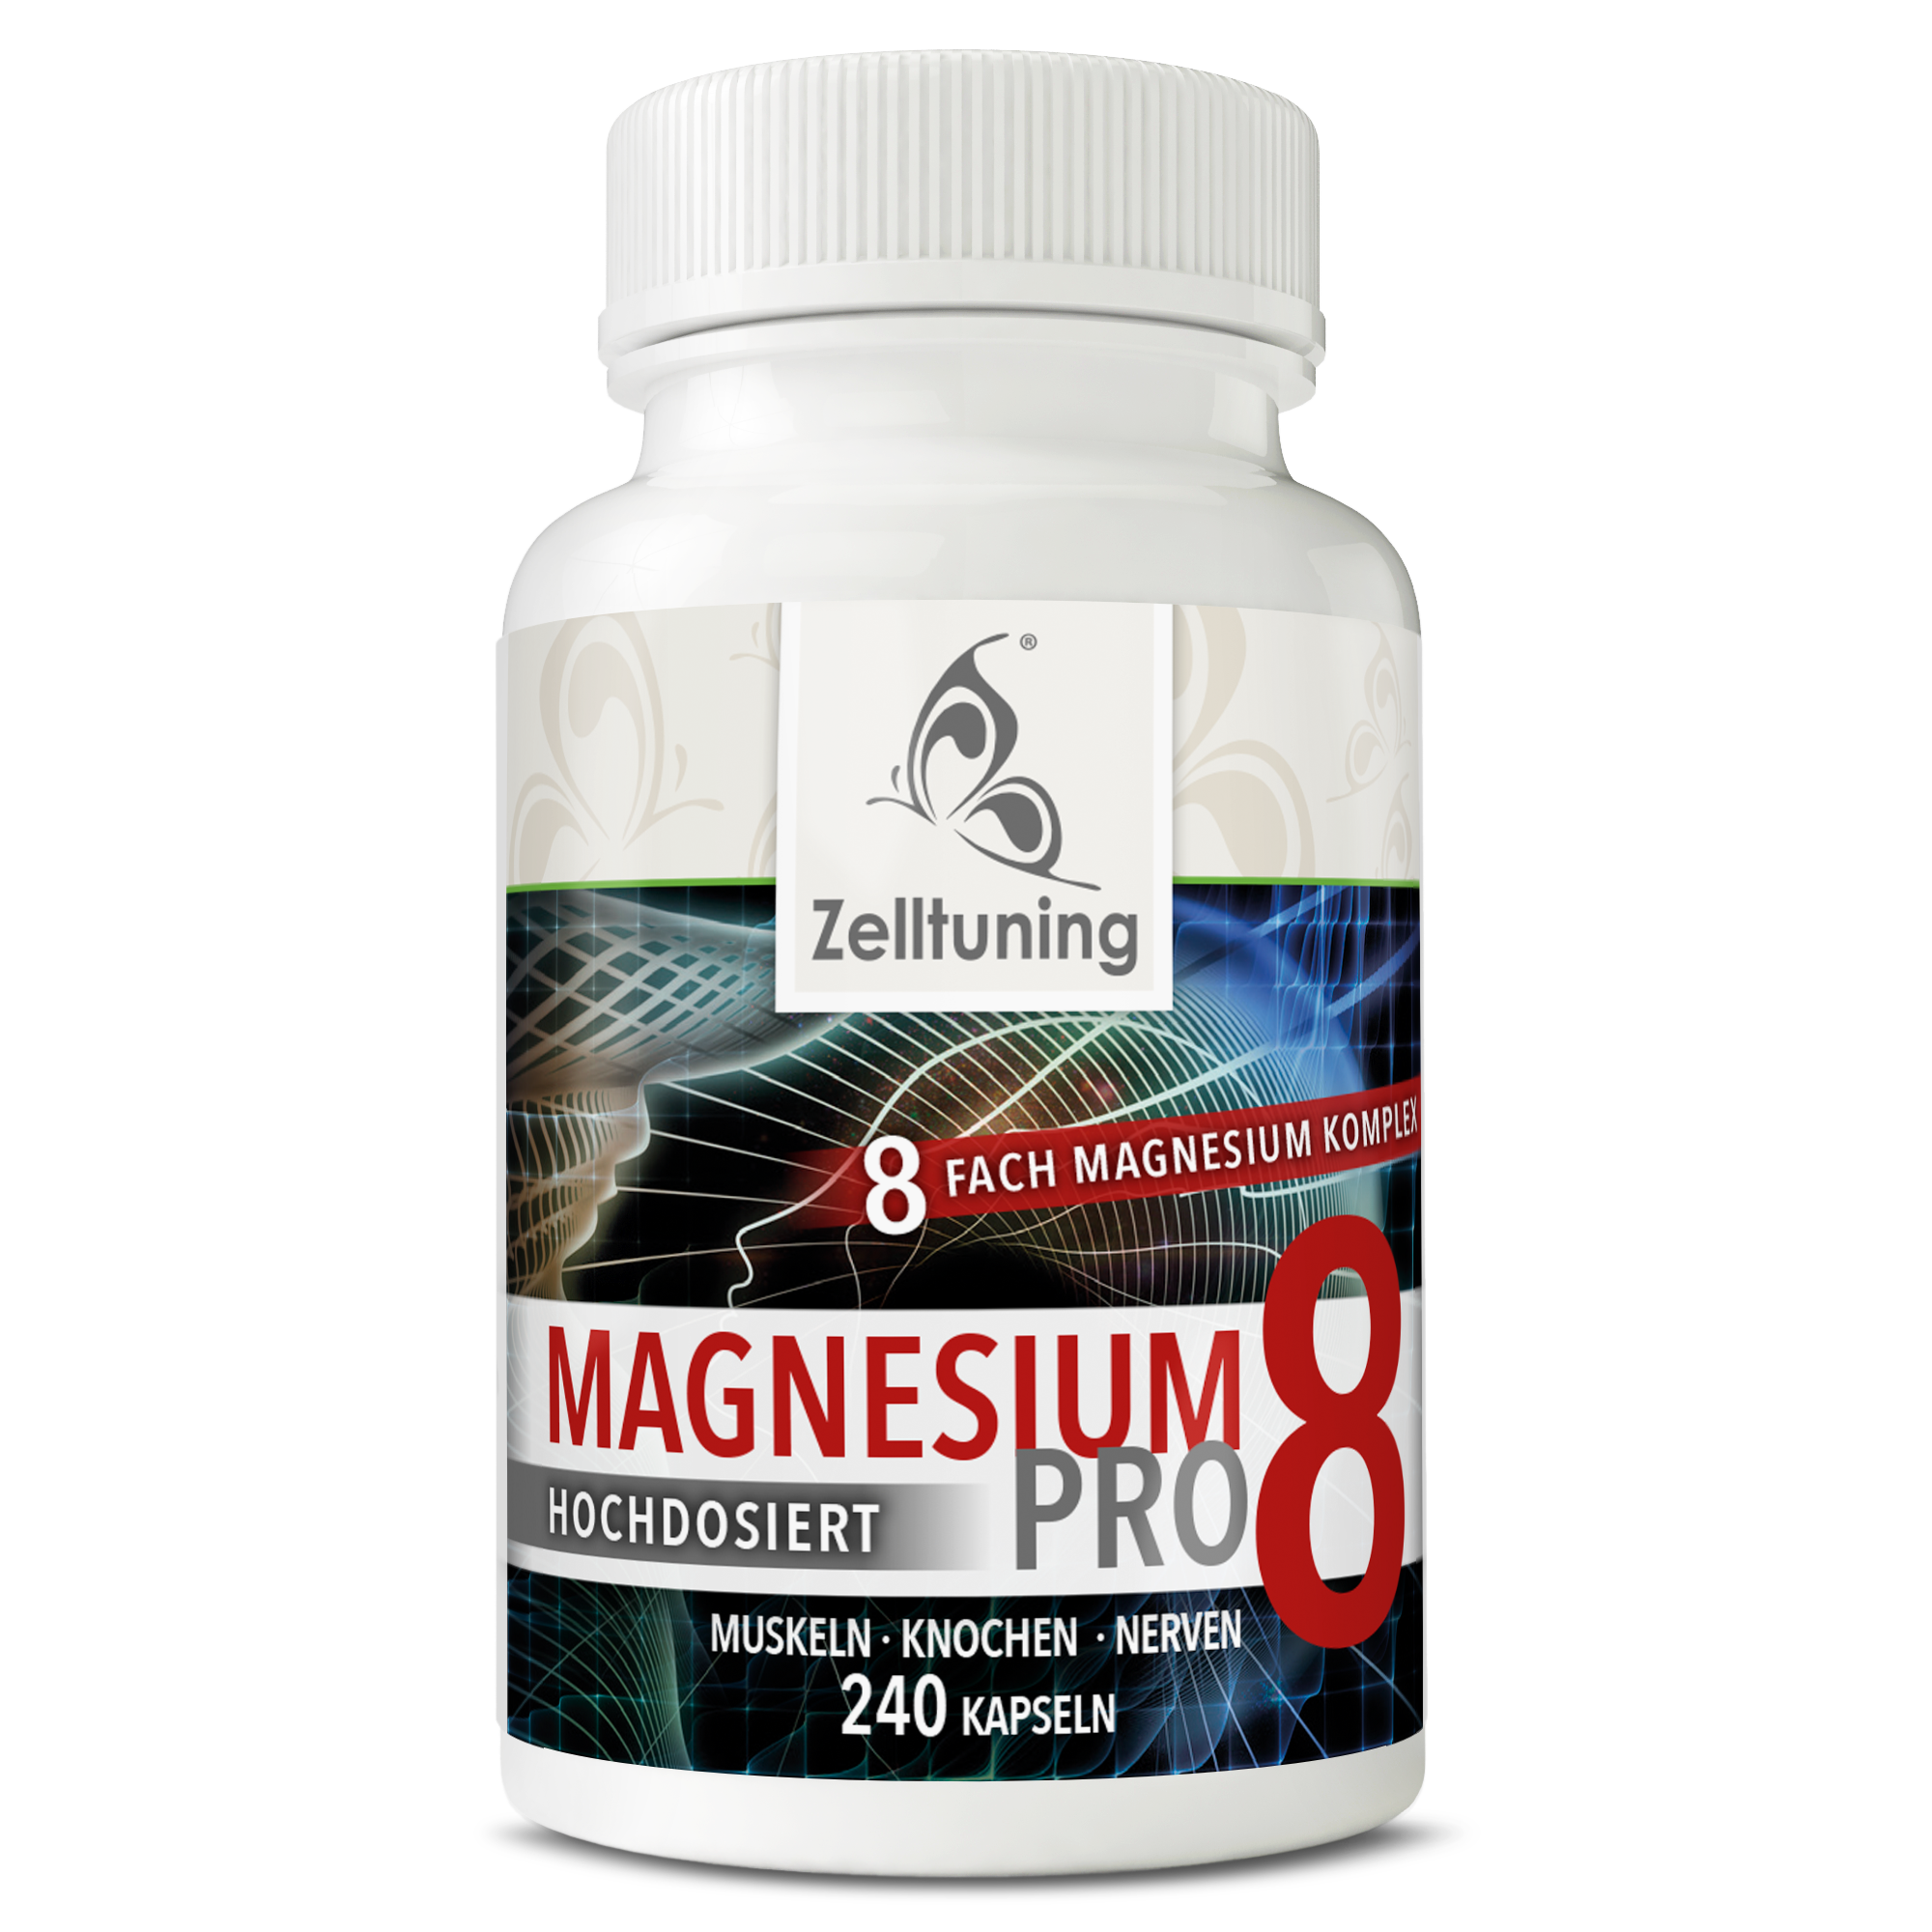 Magnesium Komplex Hochdosiert Pro 8 - 240 Kapseln